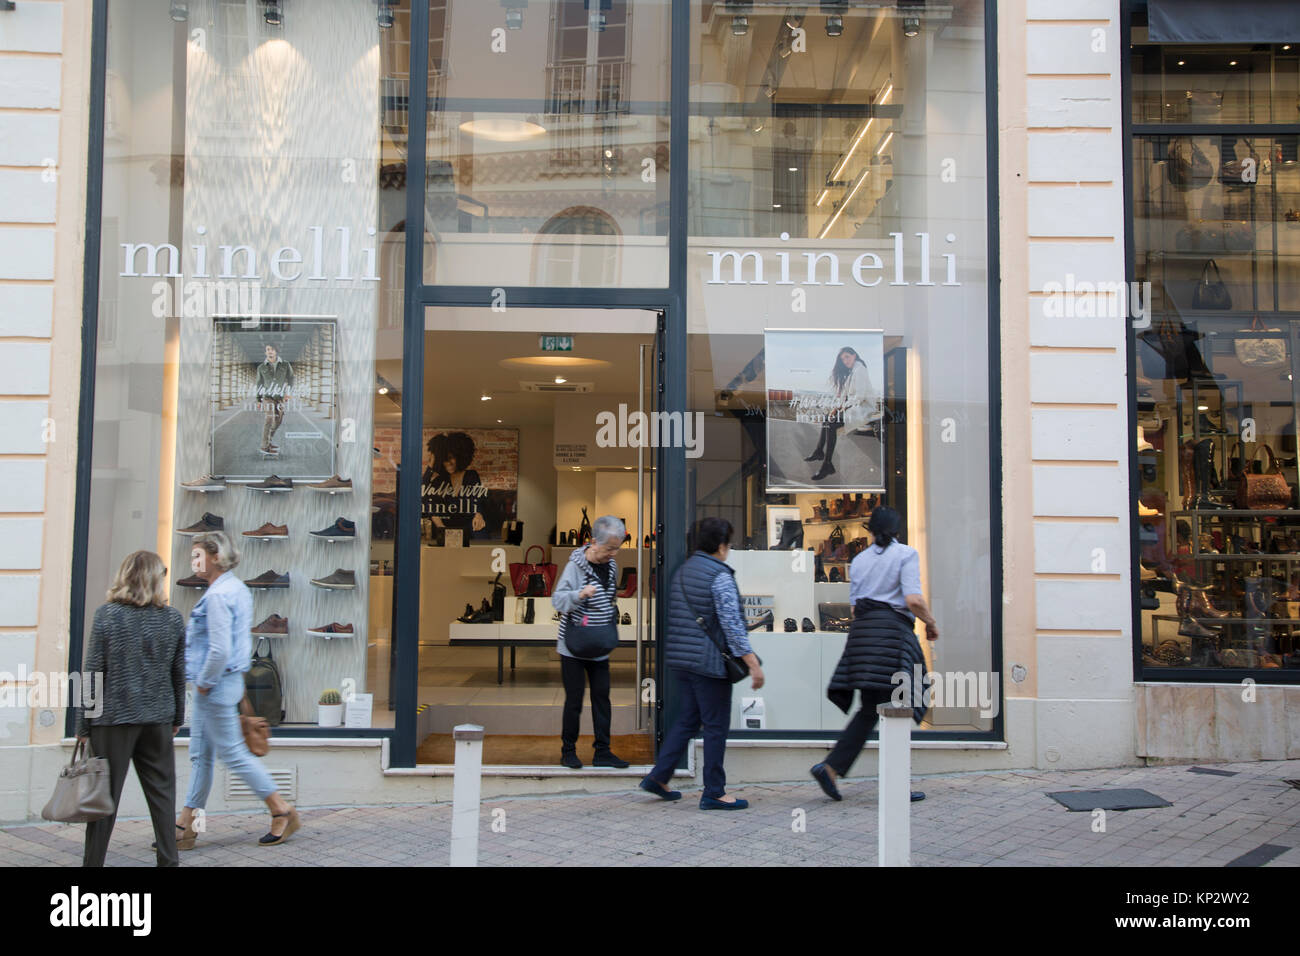 Minelli Shoe Shop; Biarritz, France Stock Photo - Alamy